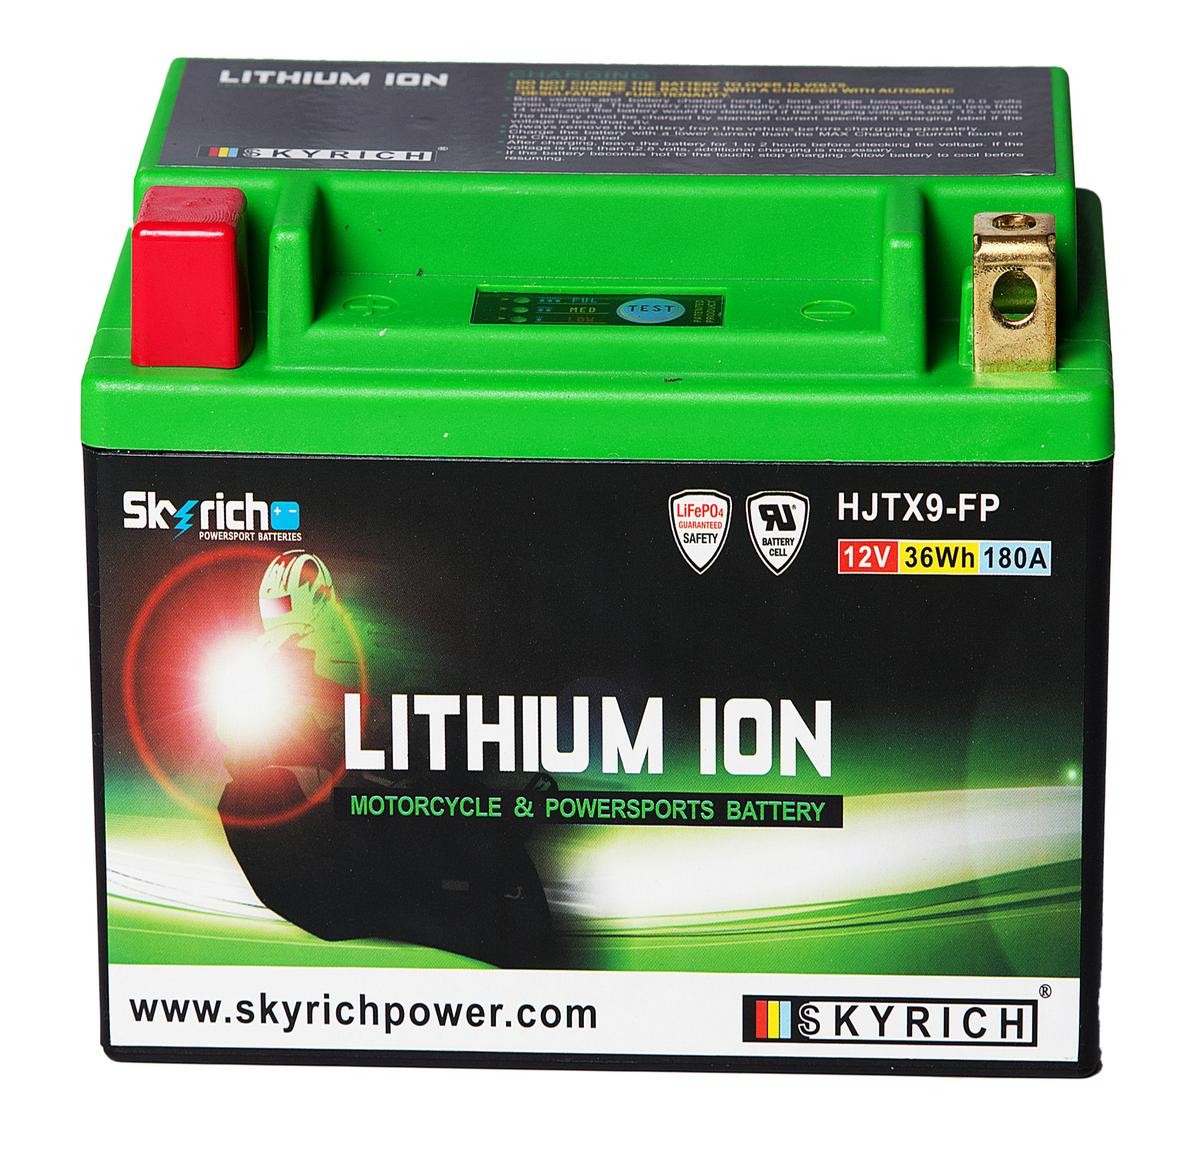 SUZUKI UH Batterie 12V 3Ah 180A N Li-Ionen-Batterie SKYRICH LITHIUM ION HJTX9-FP